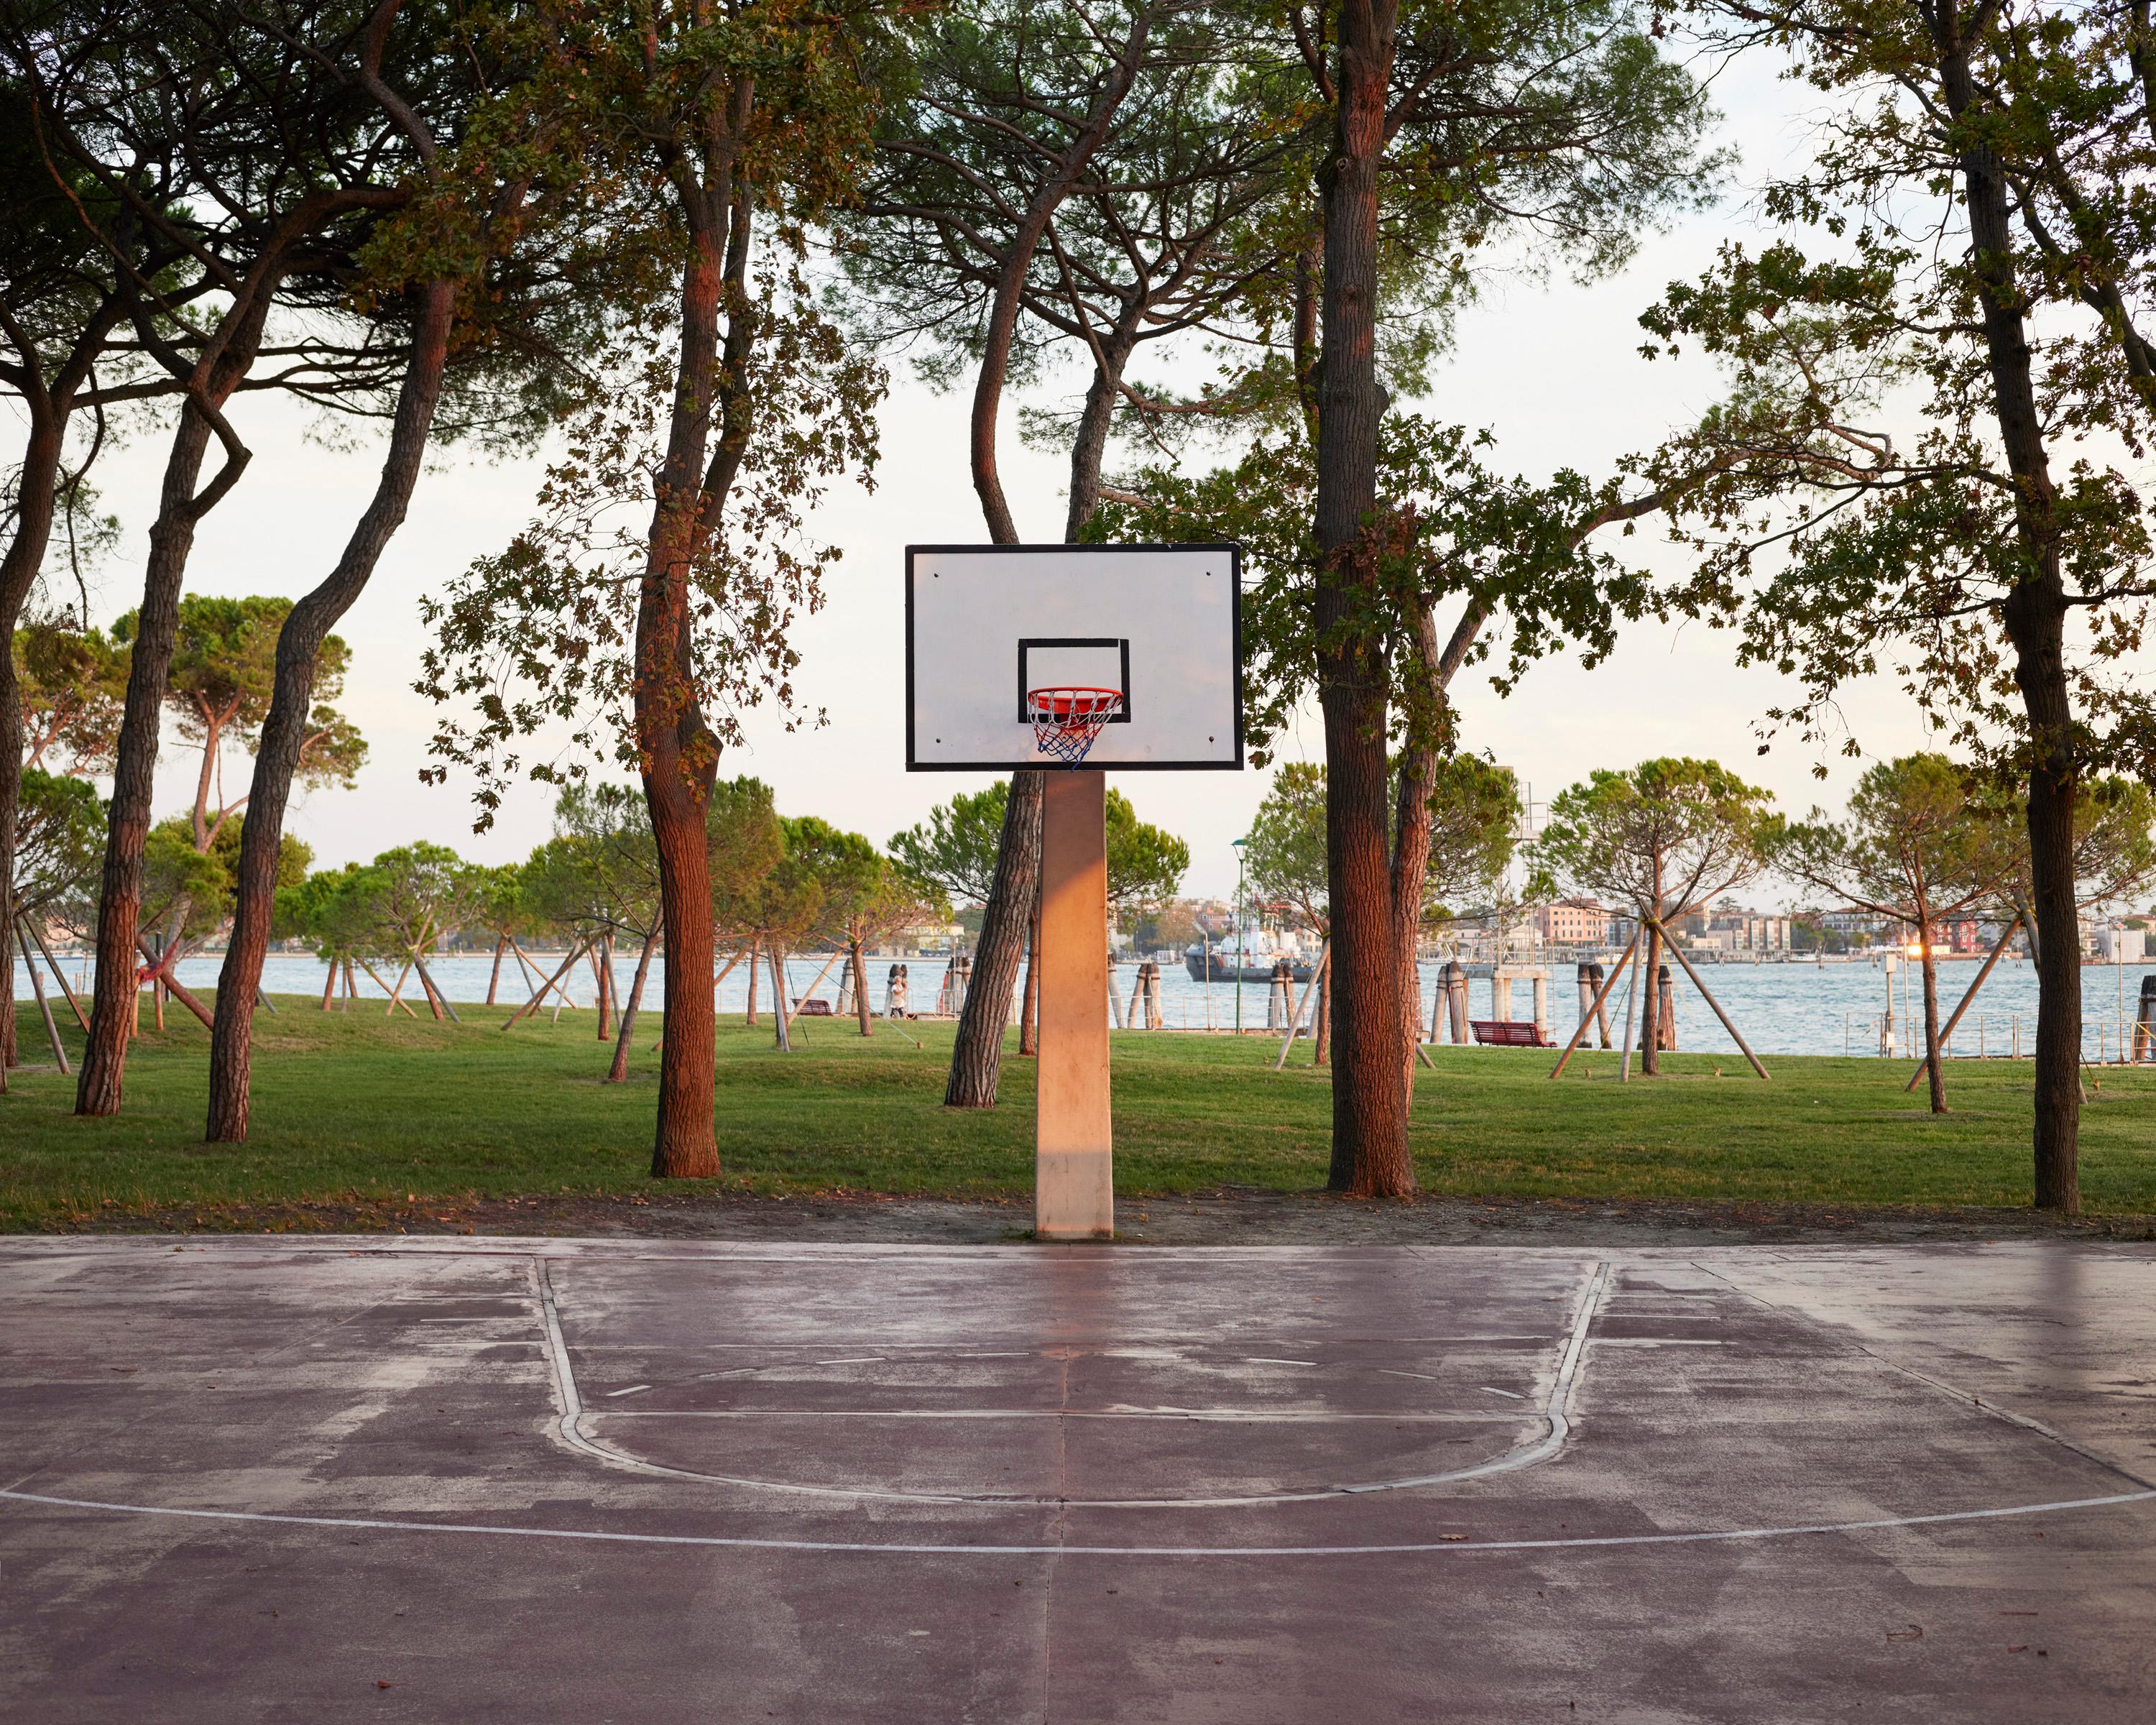 Sean Hemmerle Landscape Photograph - "Campa da Pallencestro, Venice, Italy, 2022" HOOPS basketball court photograph